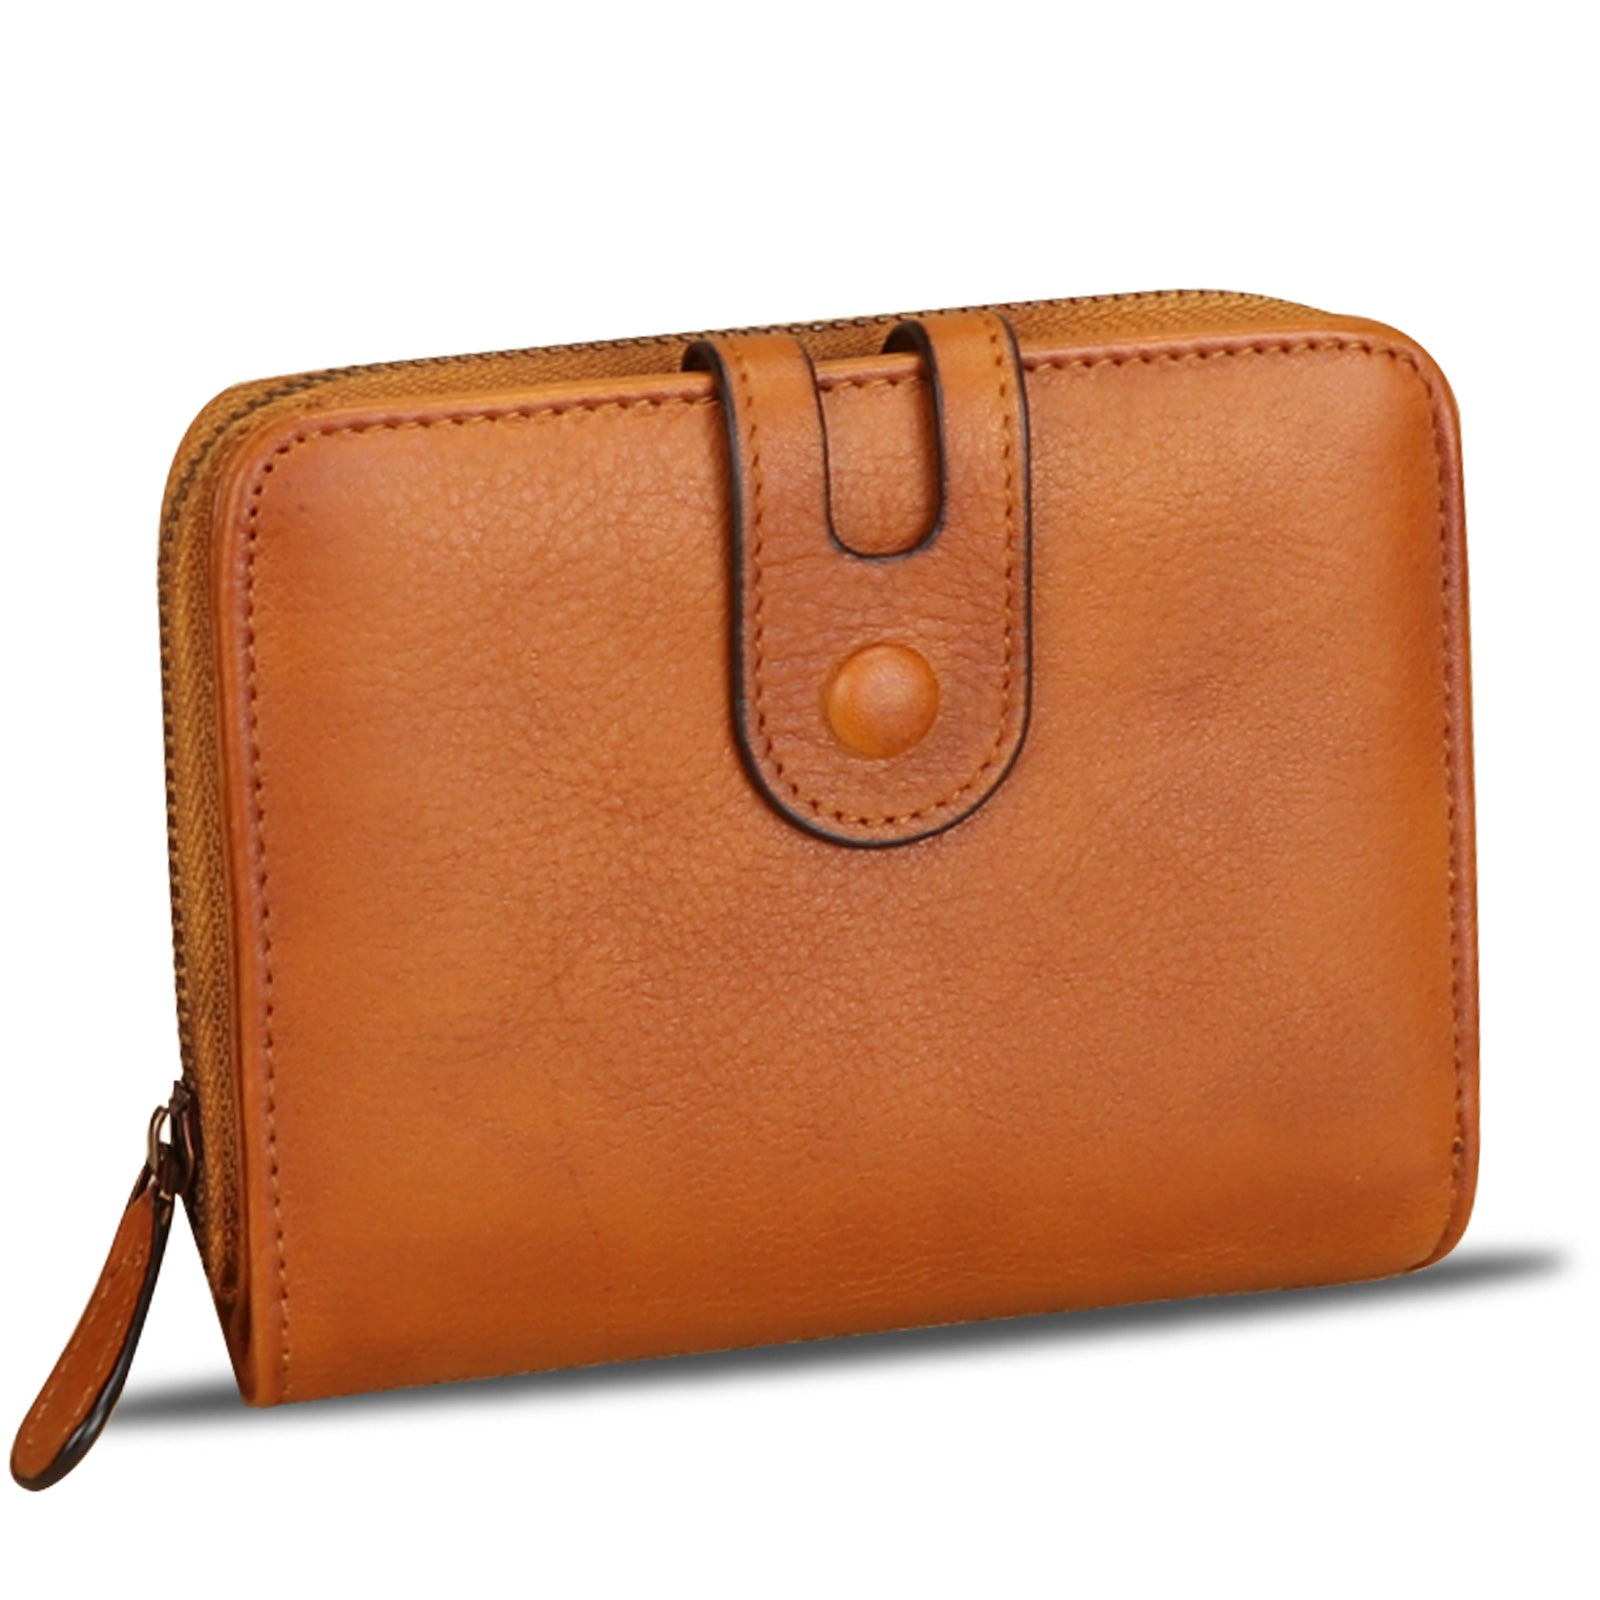 BNWT FOSSIL MADISON Bifold, Medium Brown Wallet Purse. Gift Idea RRP £42 |  eBay